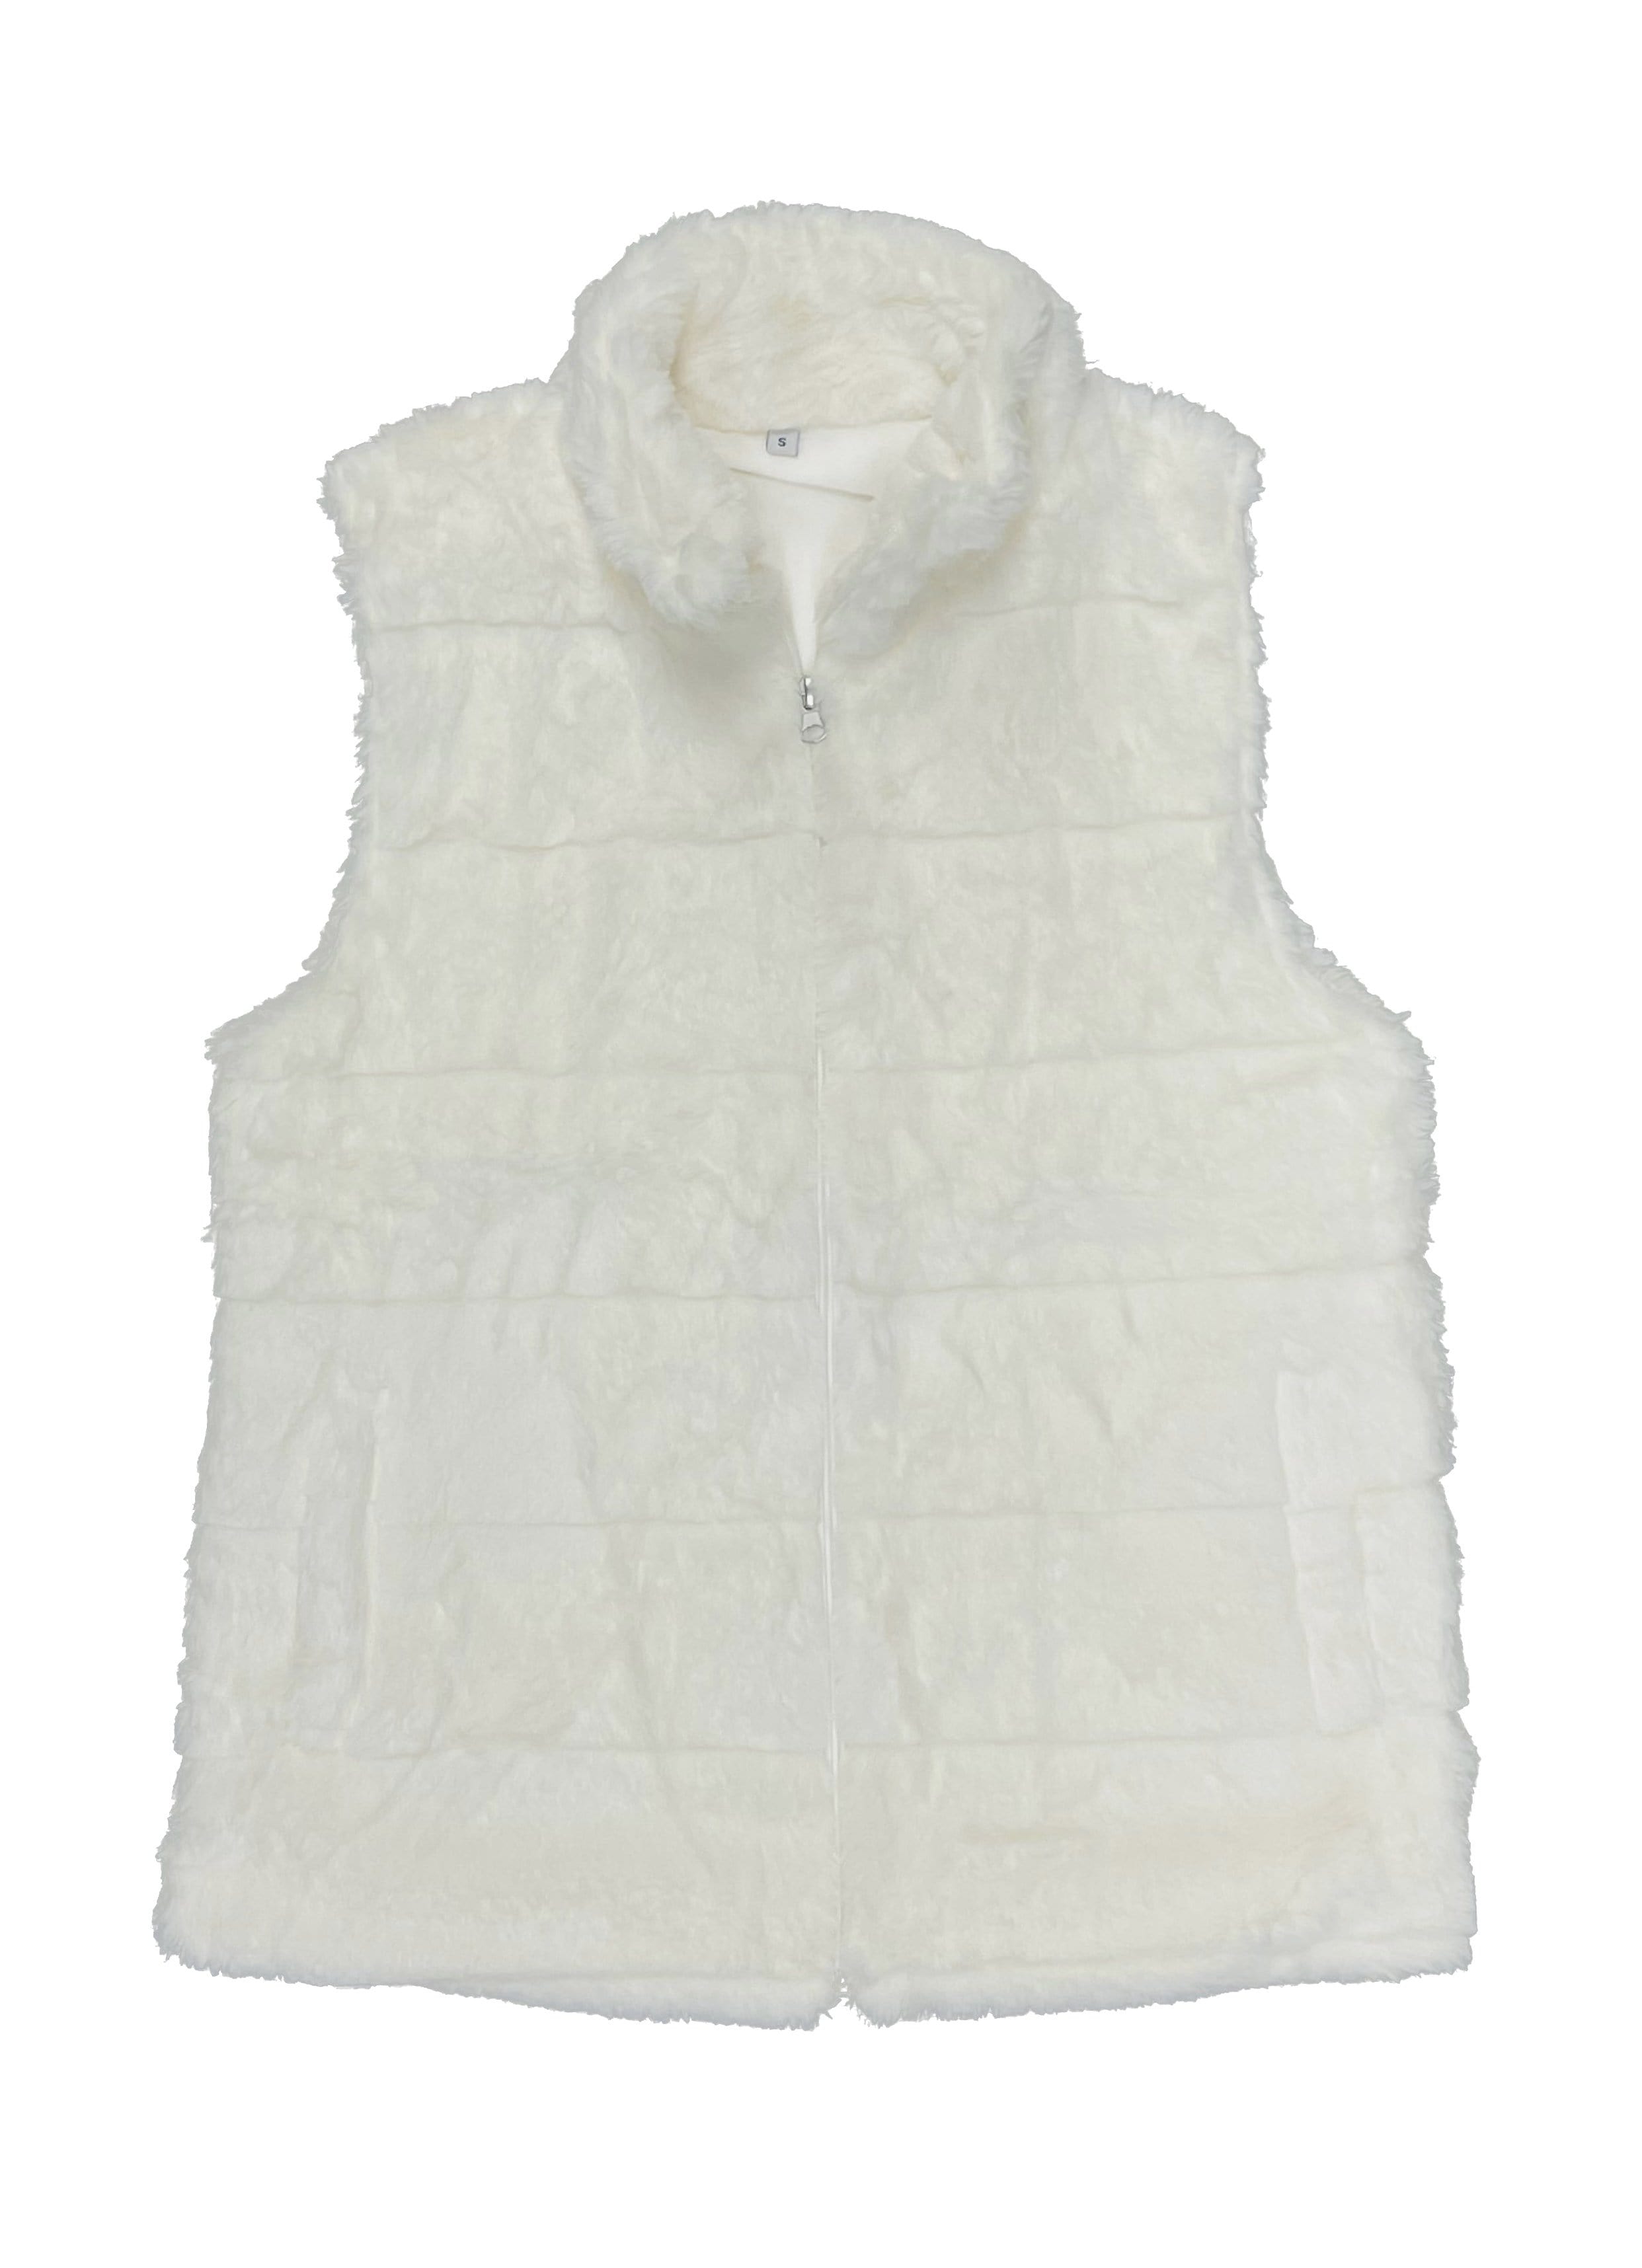 White fuzzy vest size xs, leggings size xs, grey long sleeve top